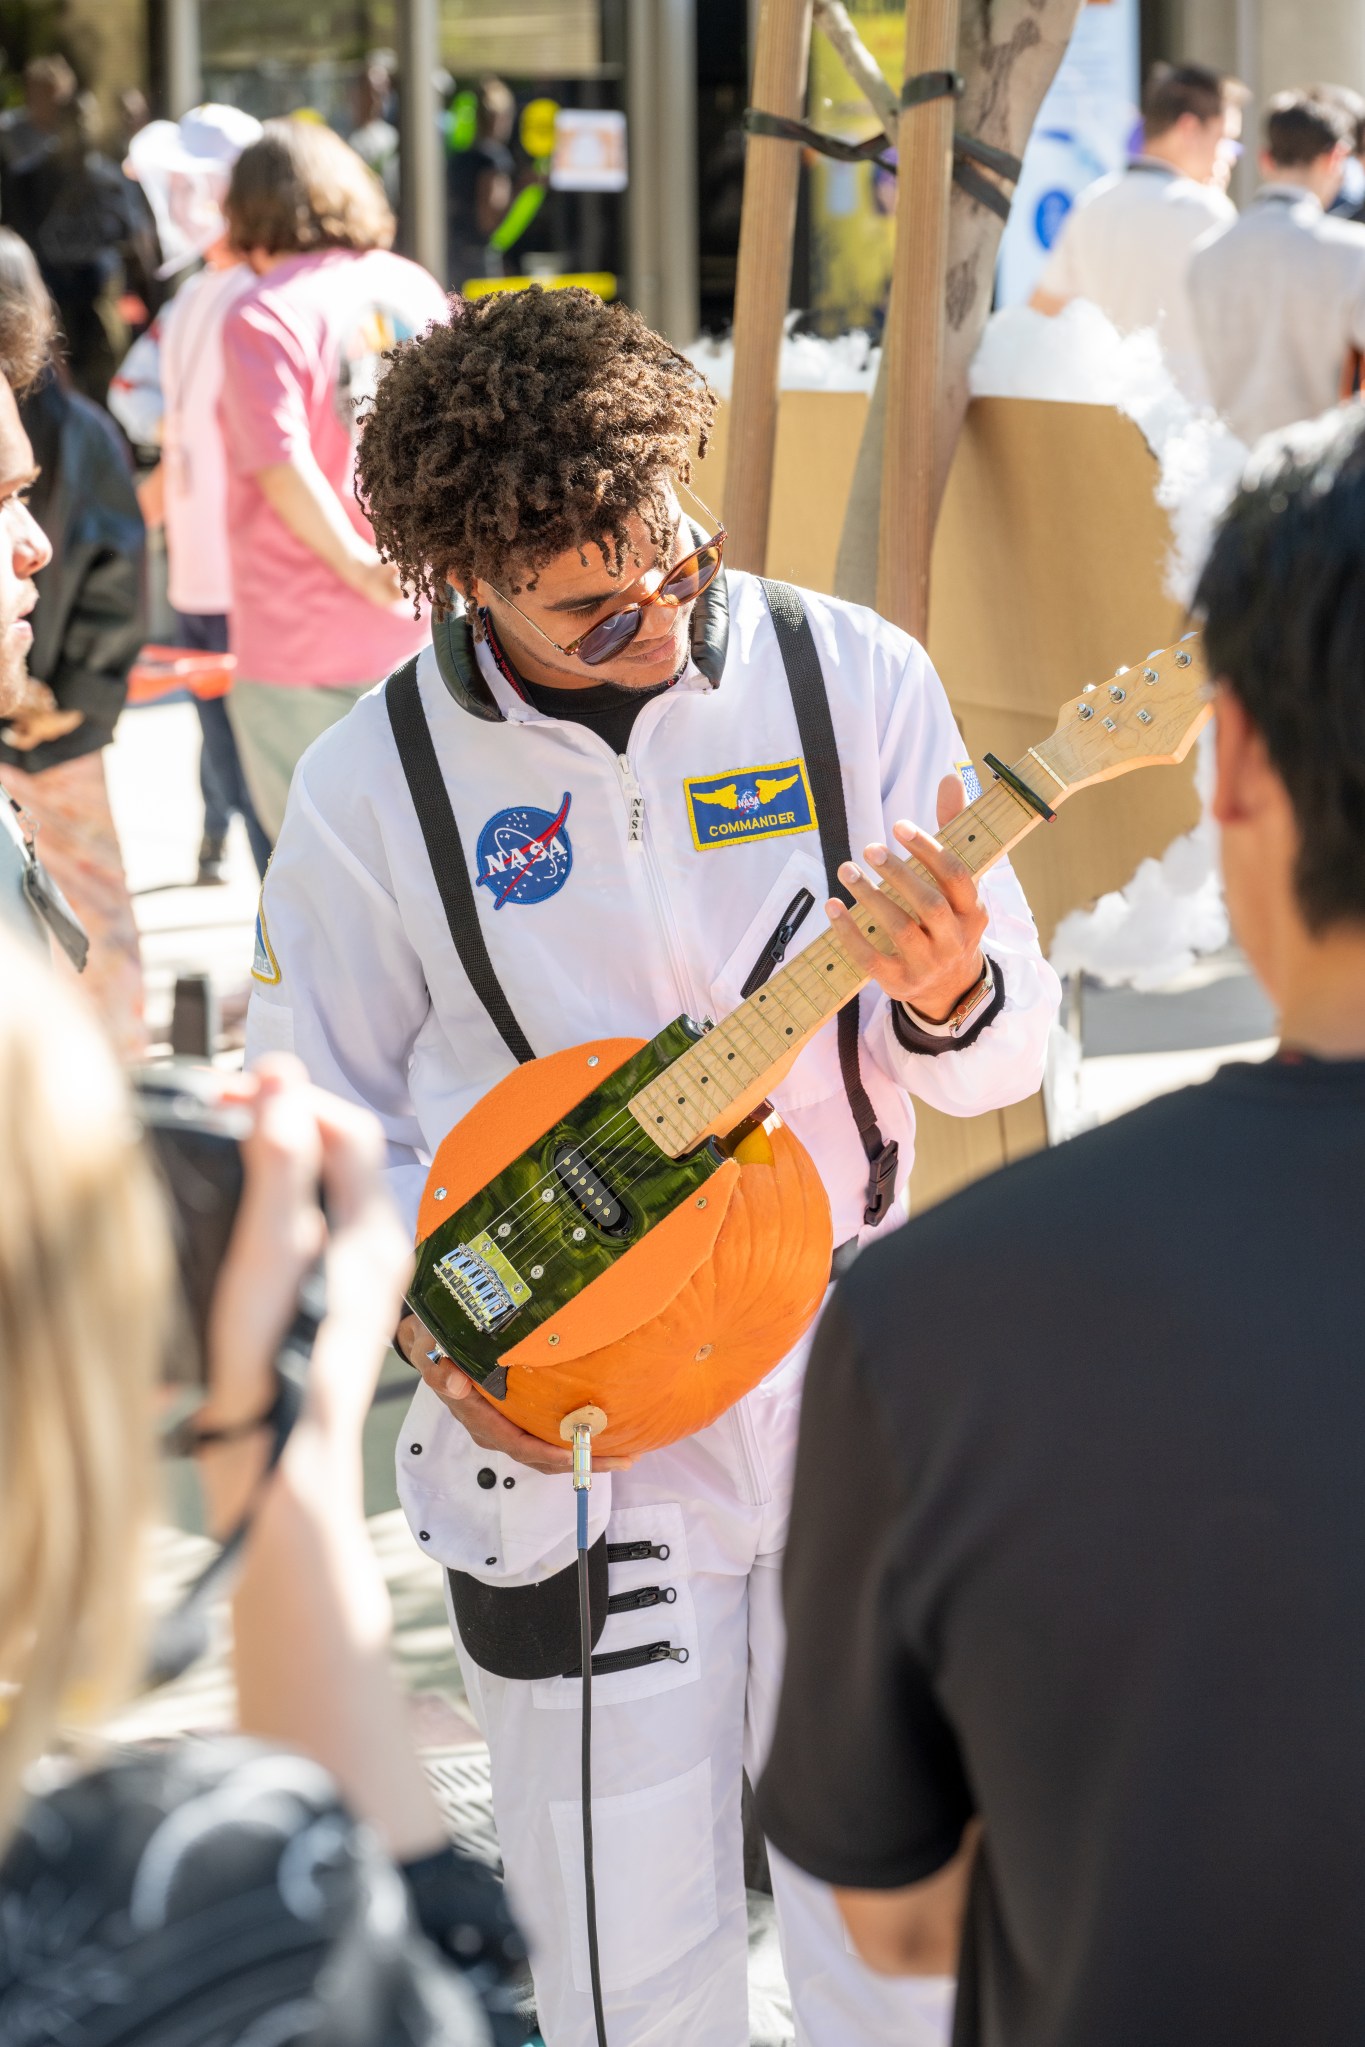 JPL employee with a pumpkin carved guitar